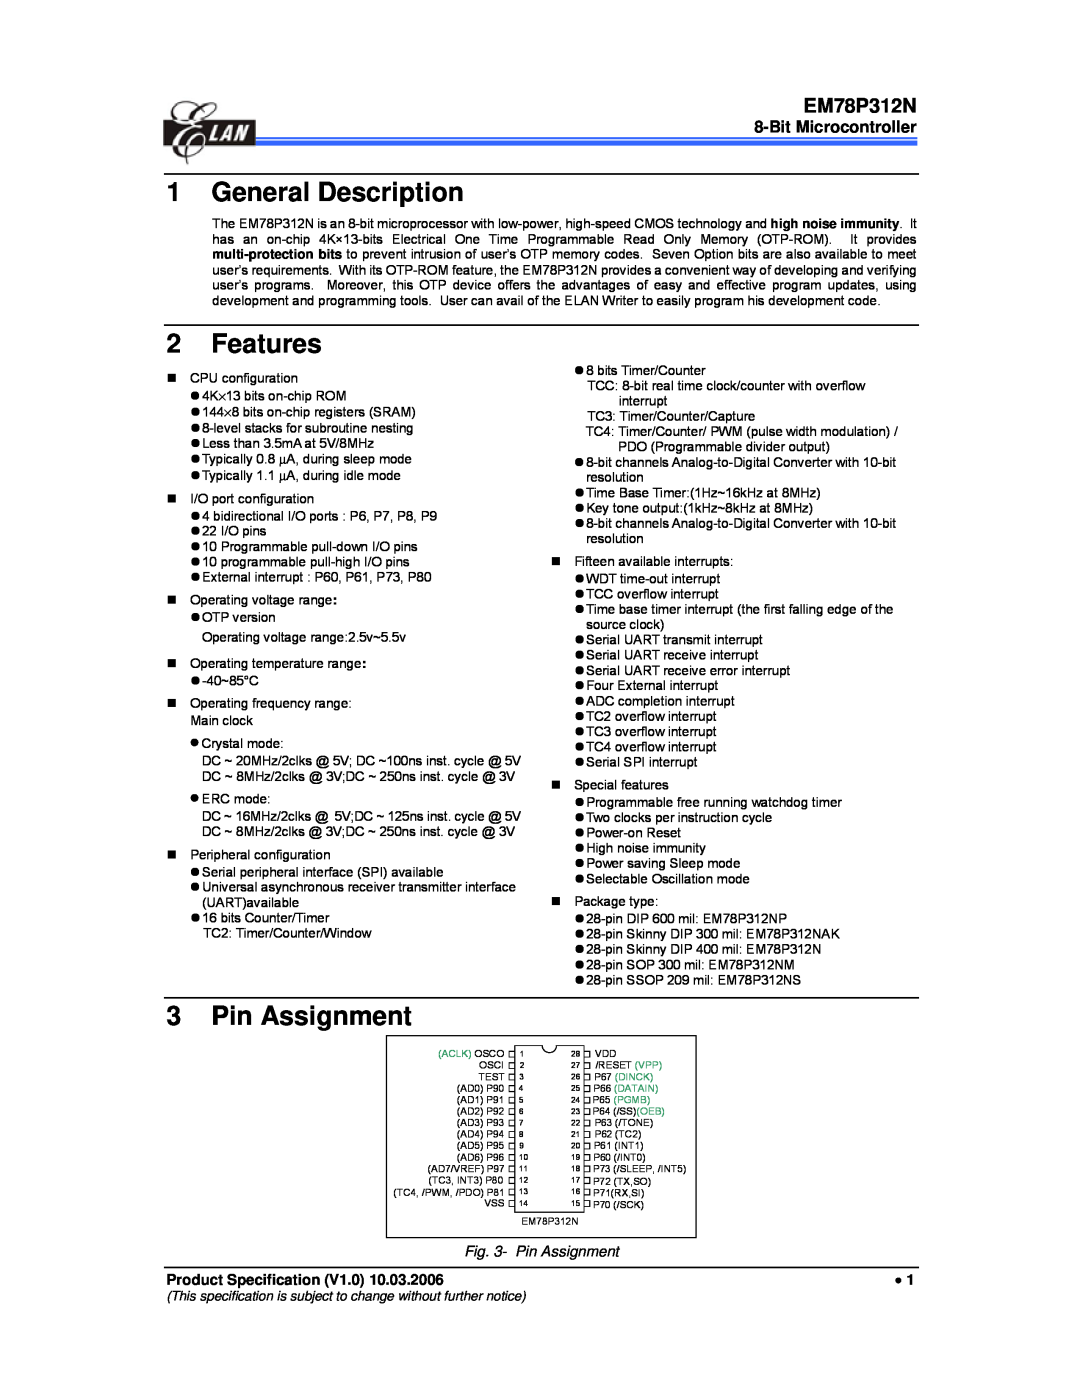 IBM EM78P312N manual General Description, Features, Pin Assignment, Bit Microcontroller 